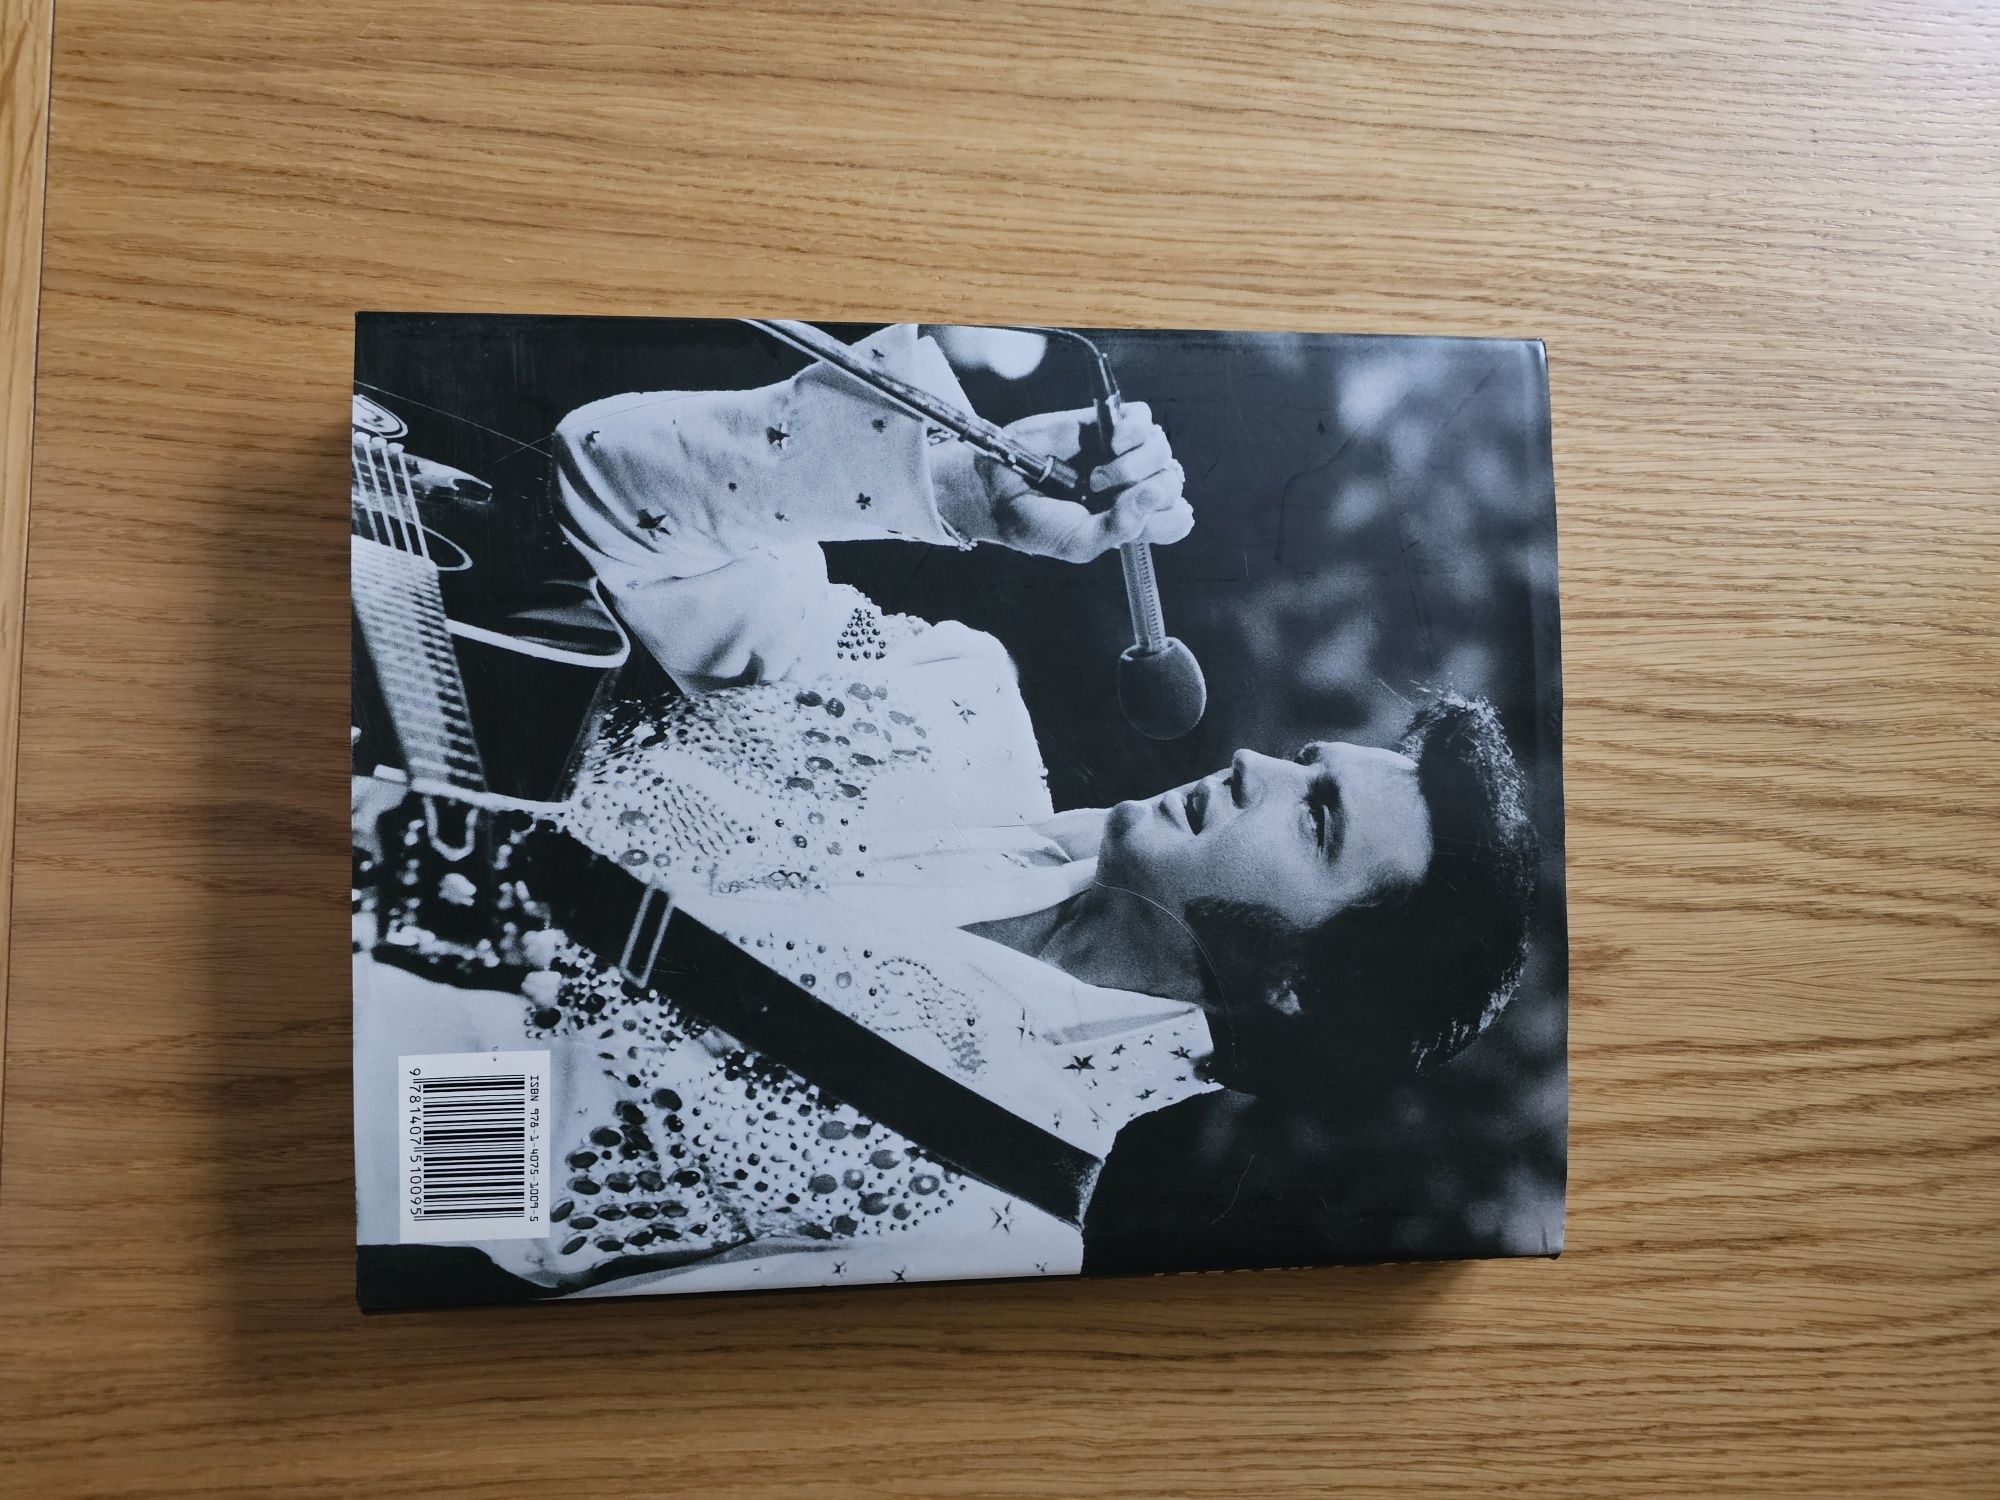 Album Elvis Presley "Nieznane fotografie"